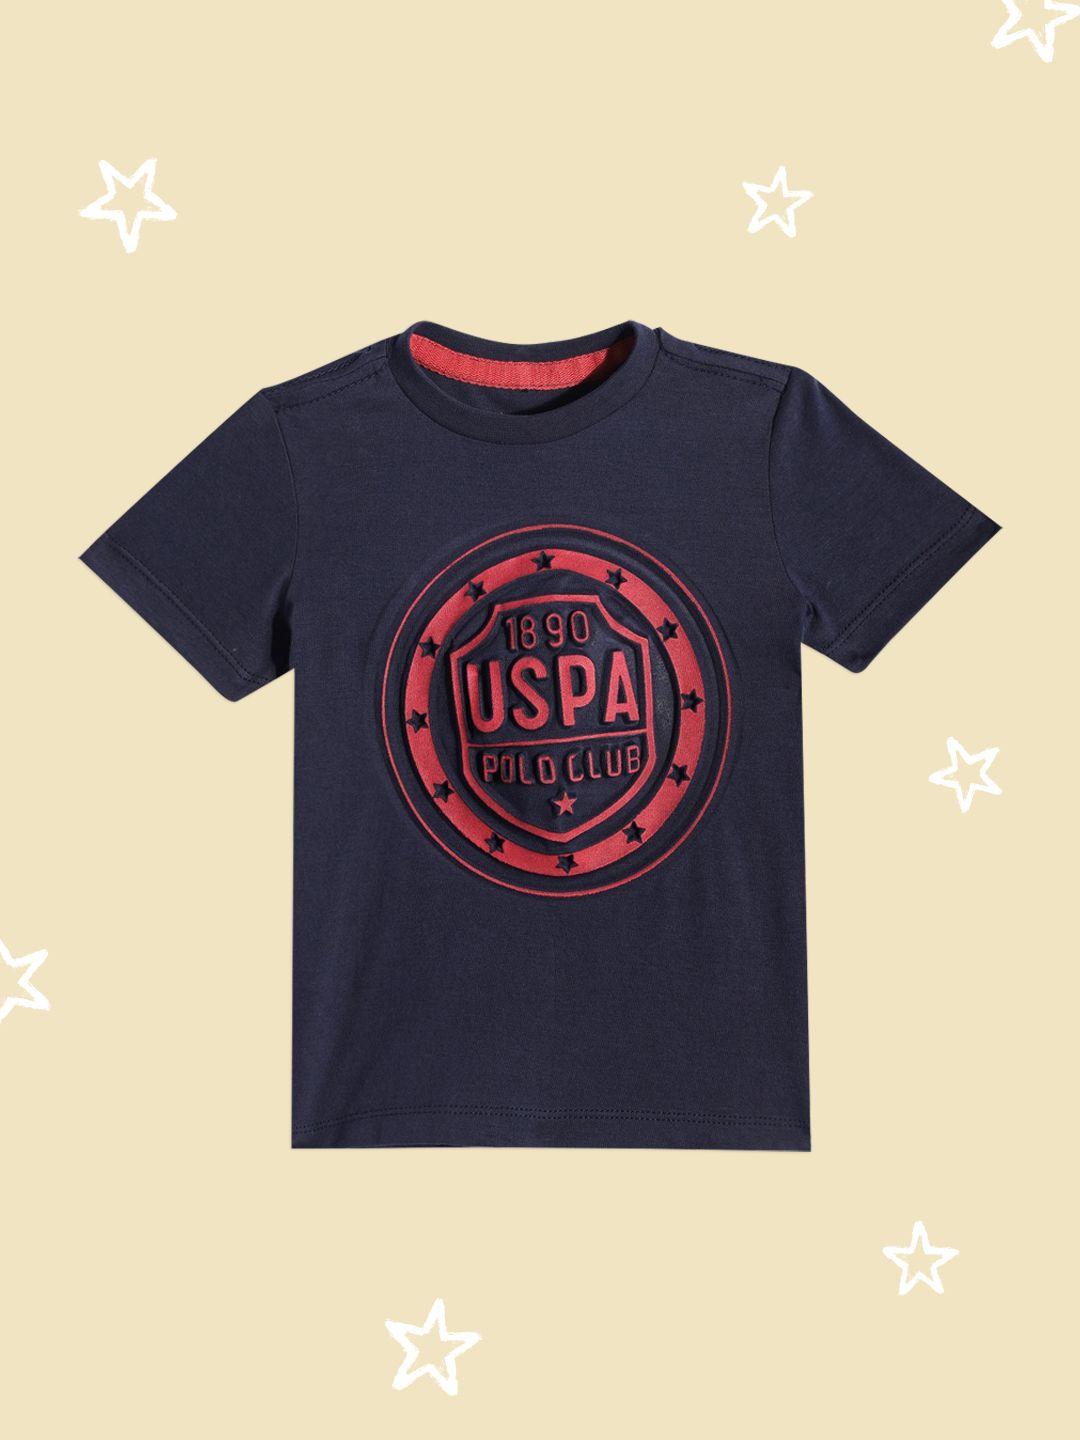 u.s. polo assn. kids boys navy blue & red brand logo printed pure cotton t-shirt